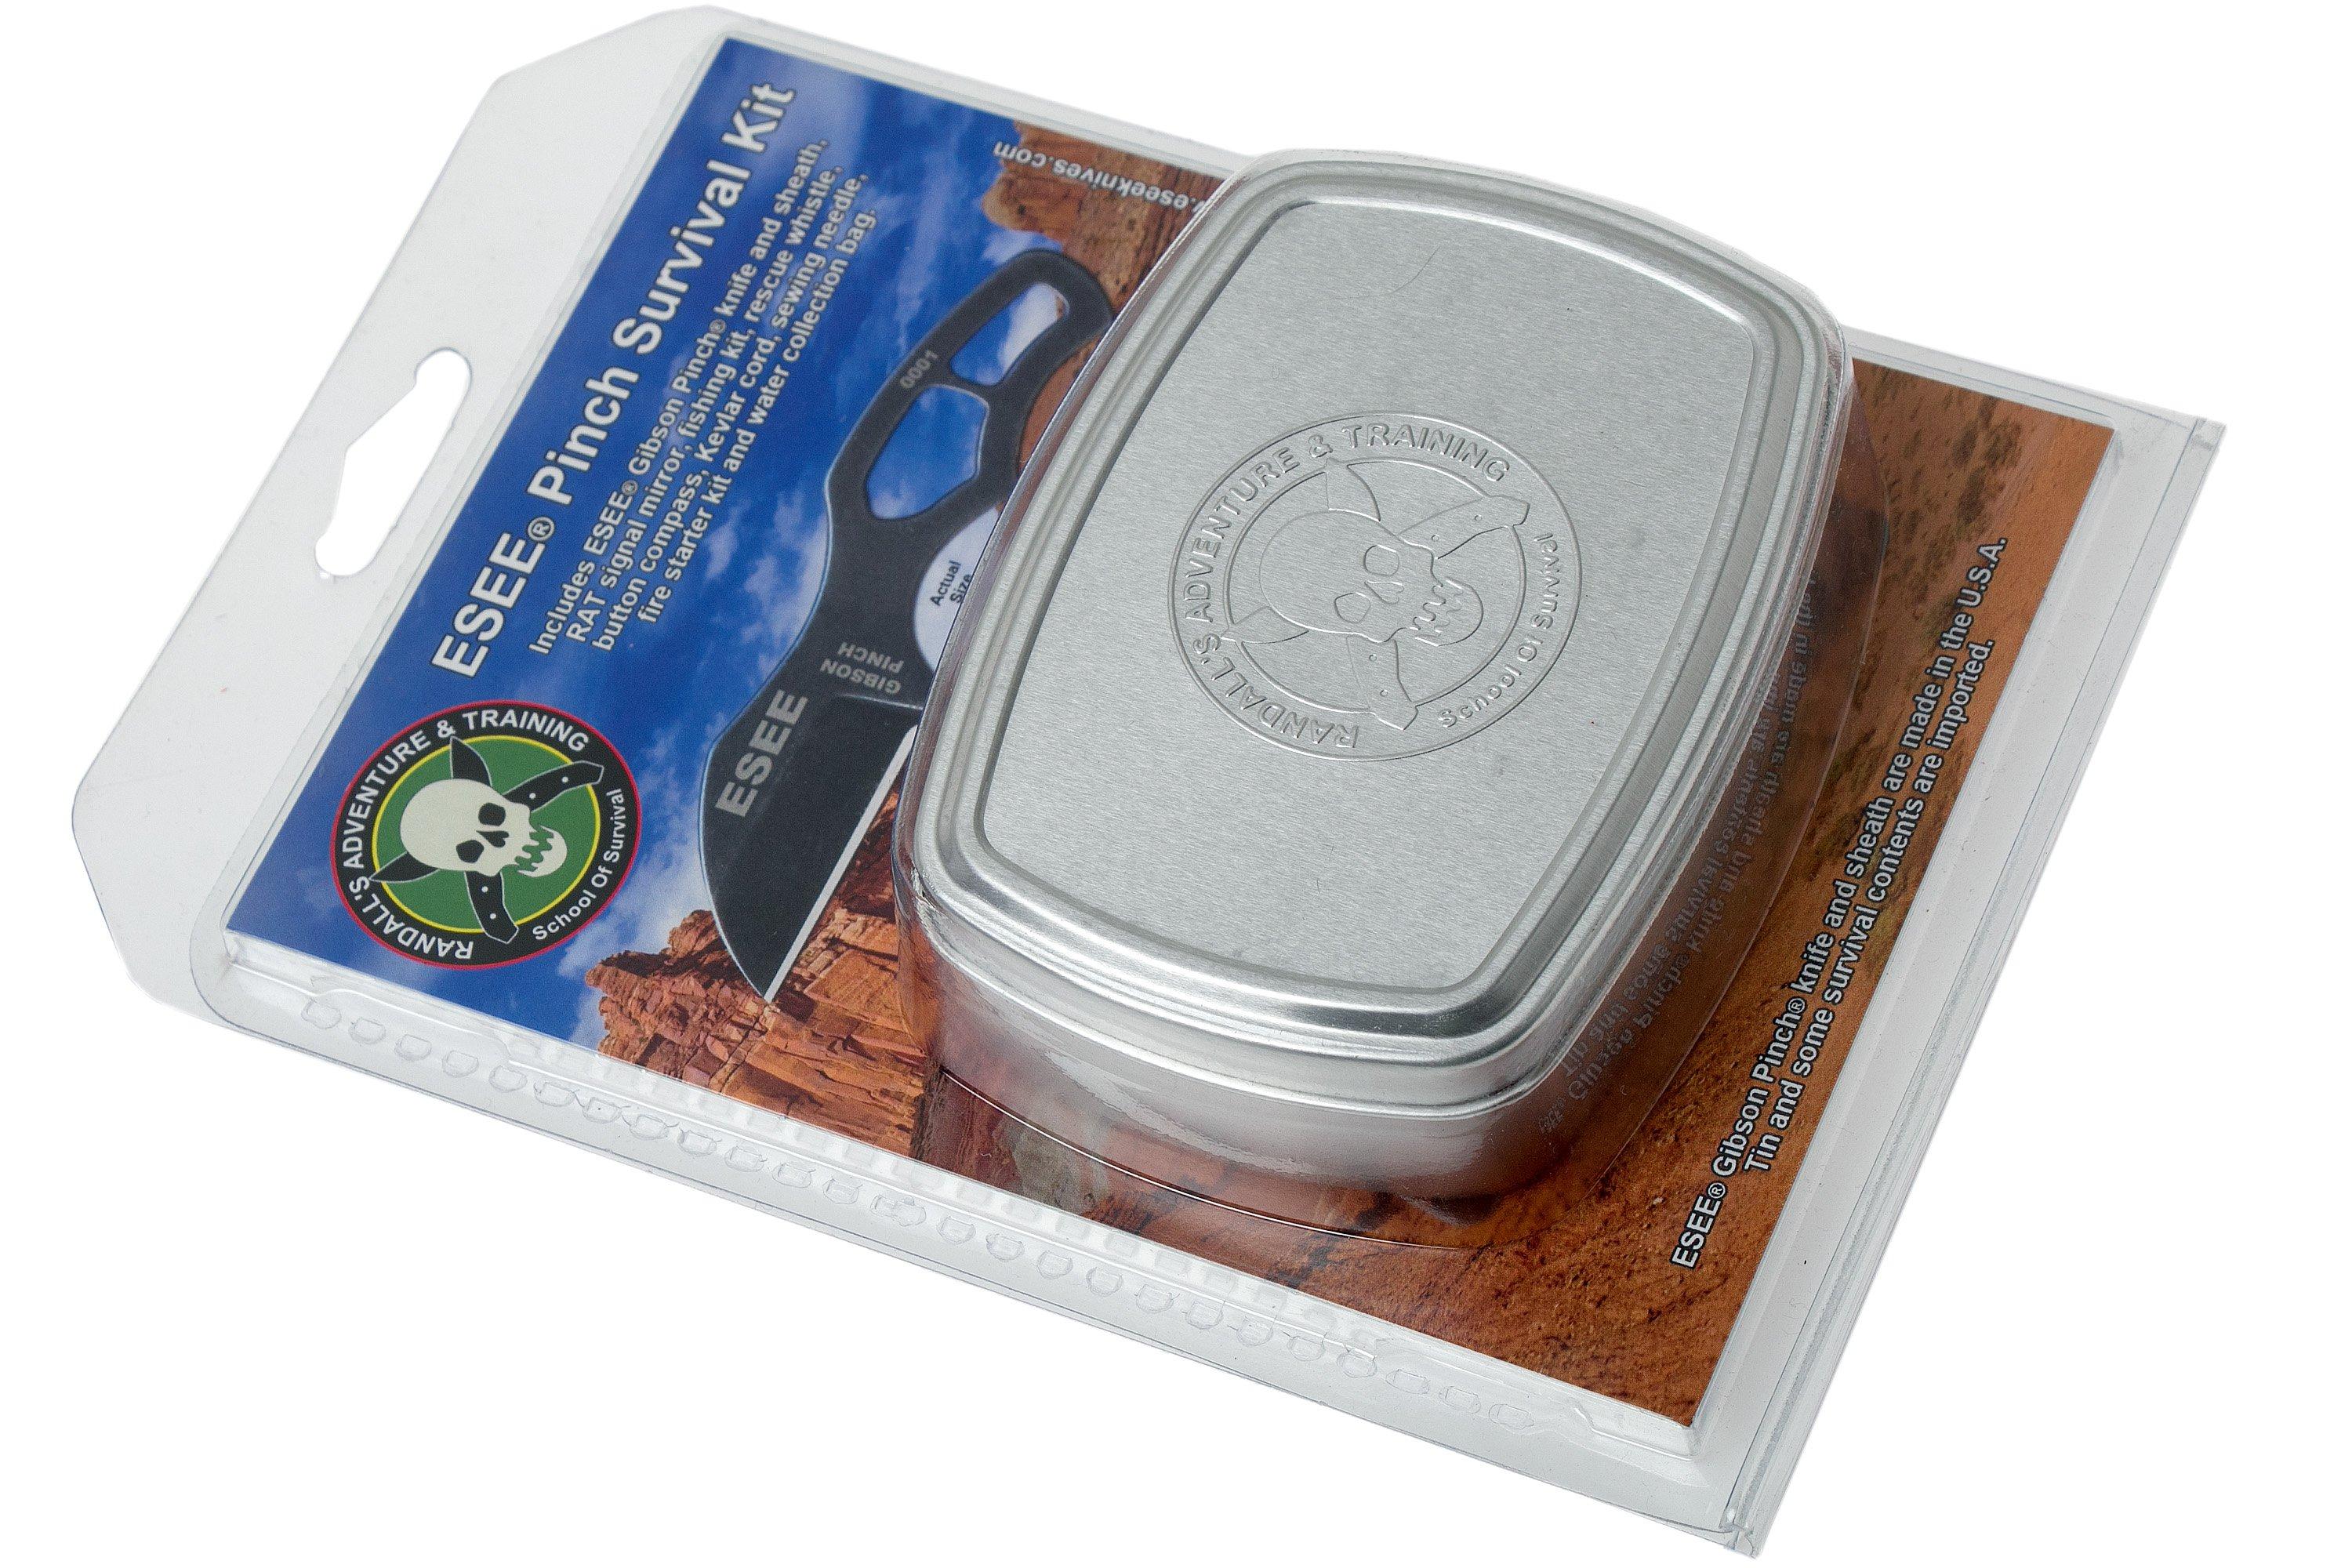 ESEE Pinch Kit survival kit  Advantageously shopping at